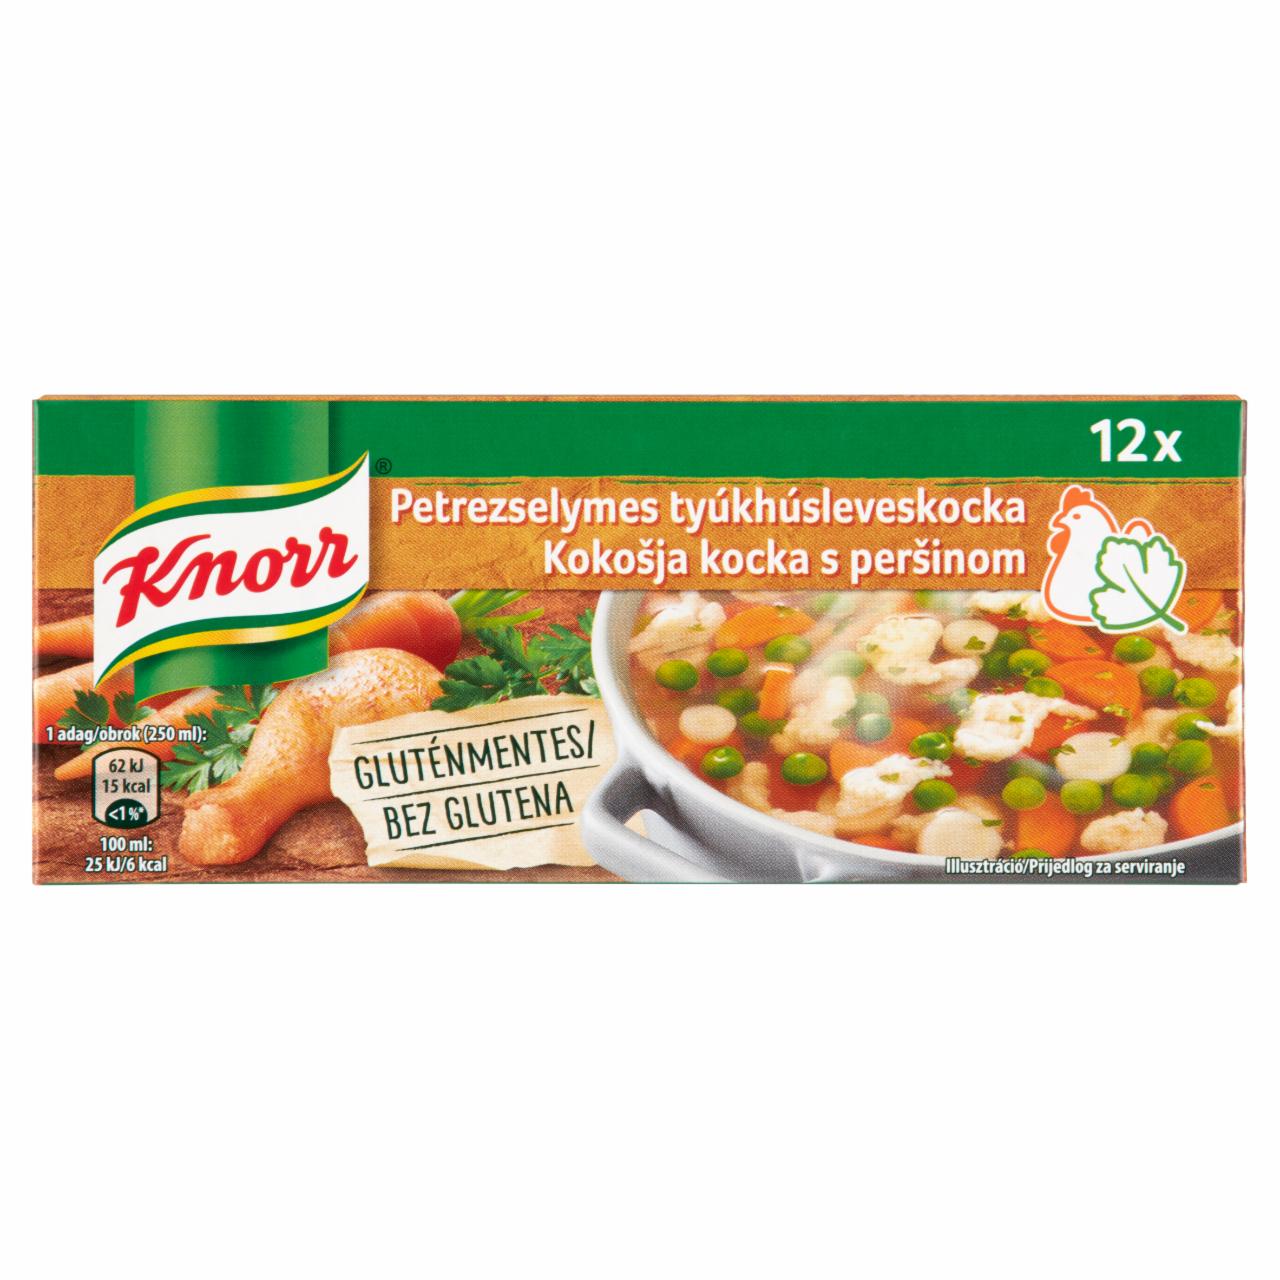 Képek - Knorr petrezselymes tyúkhúsleveskocka 12 x 10 g (120 g)